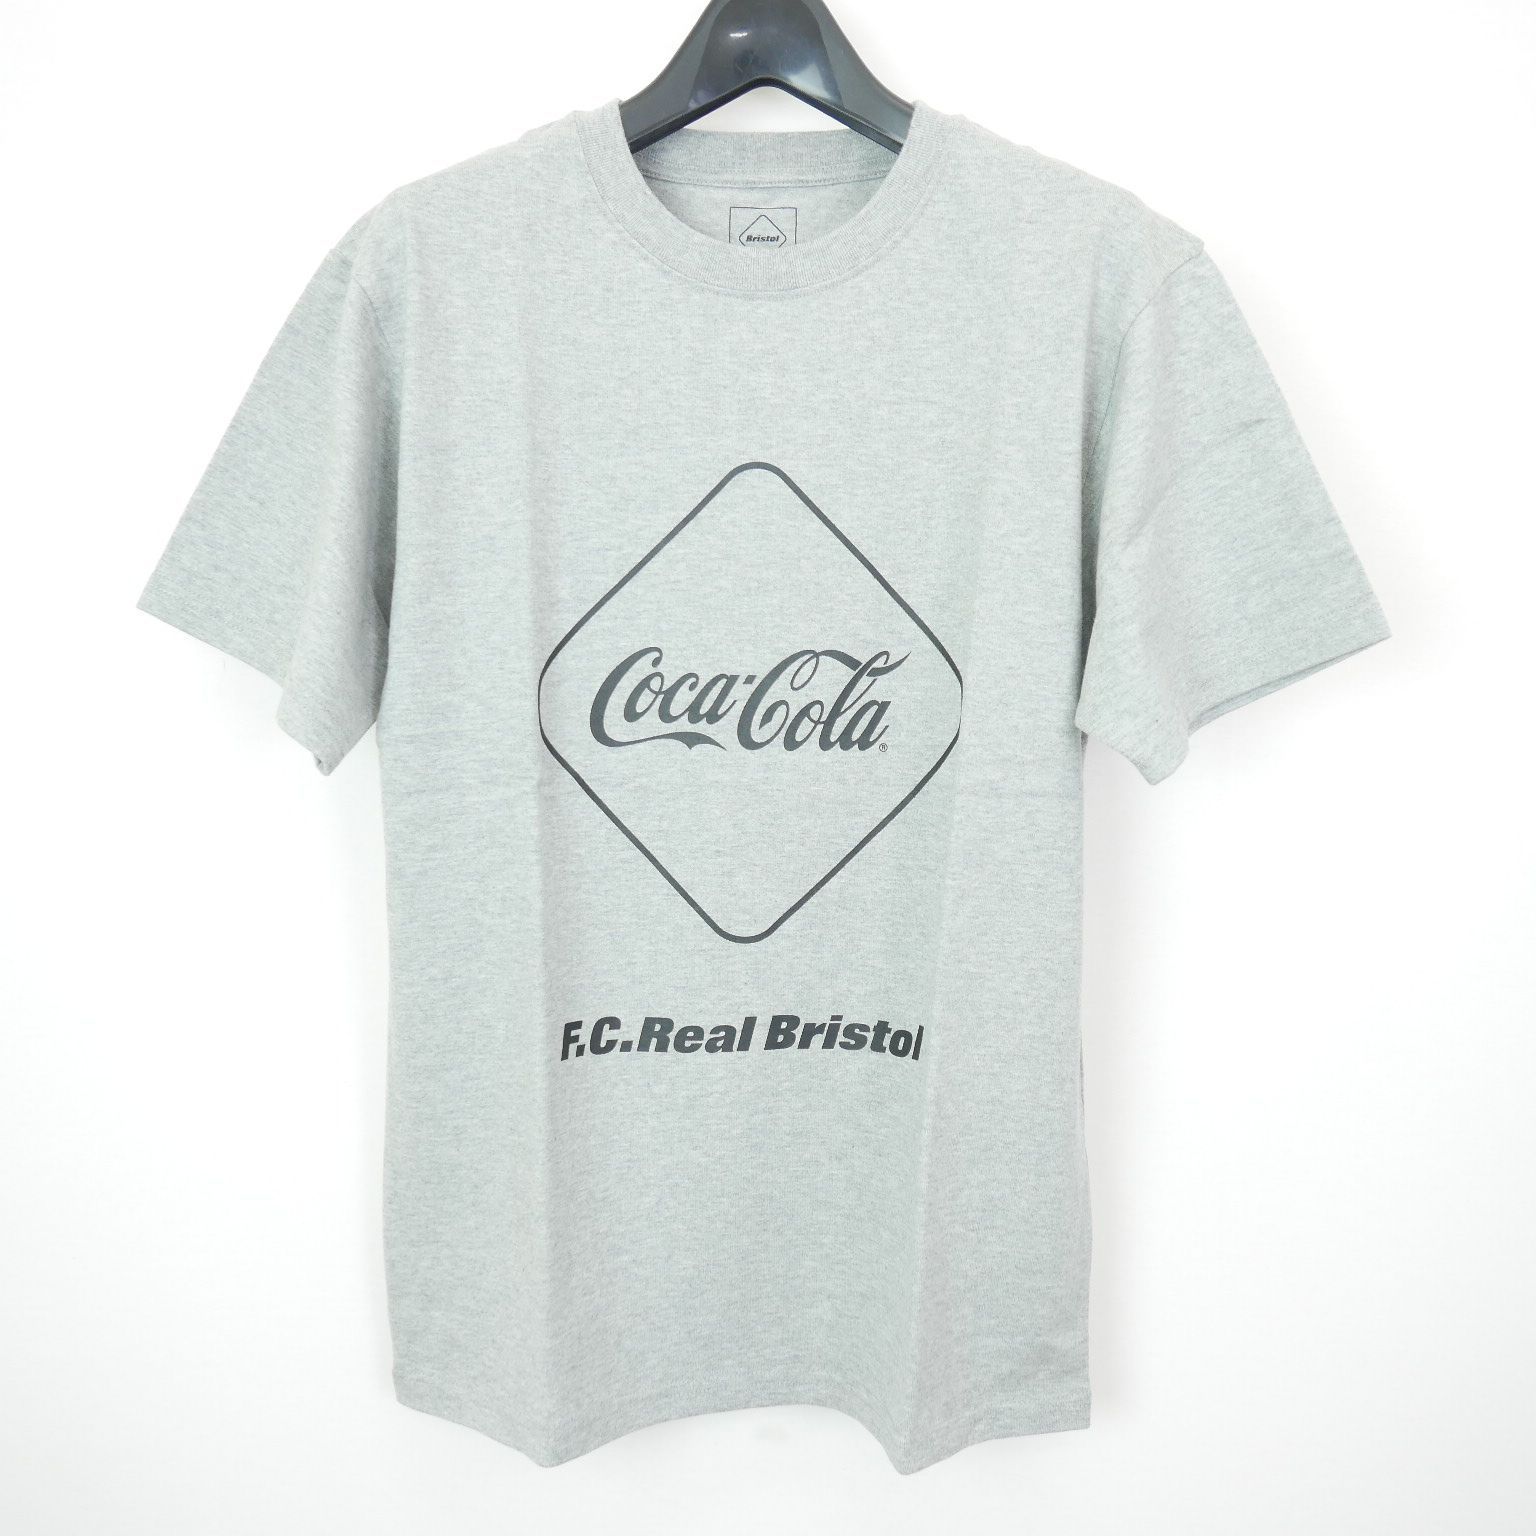 Tシャツ/カットソー(七分/長袖)Bristol ブリストル Tシャツ コカコーラ